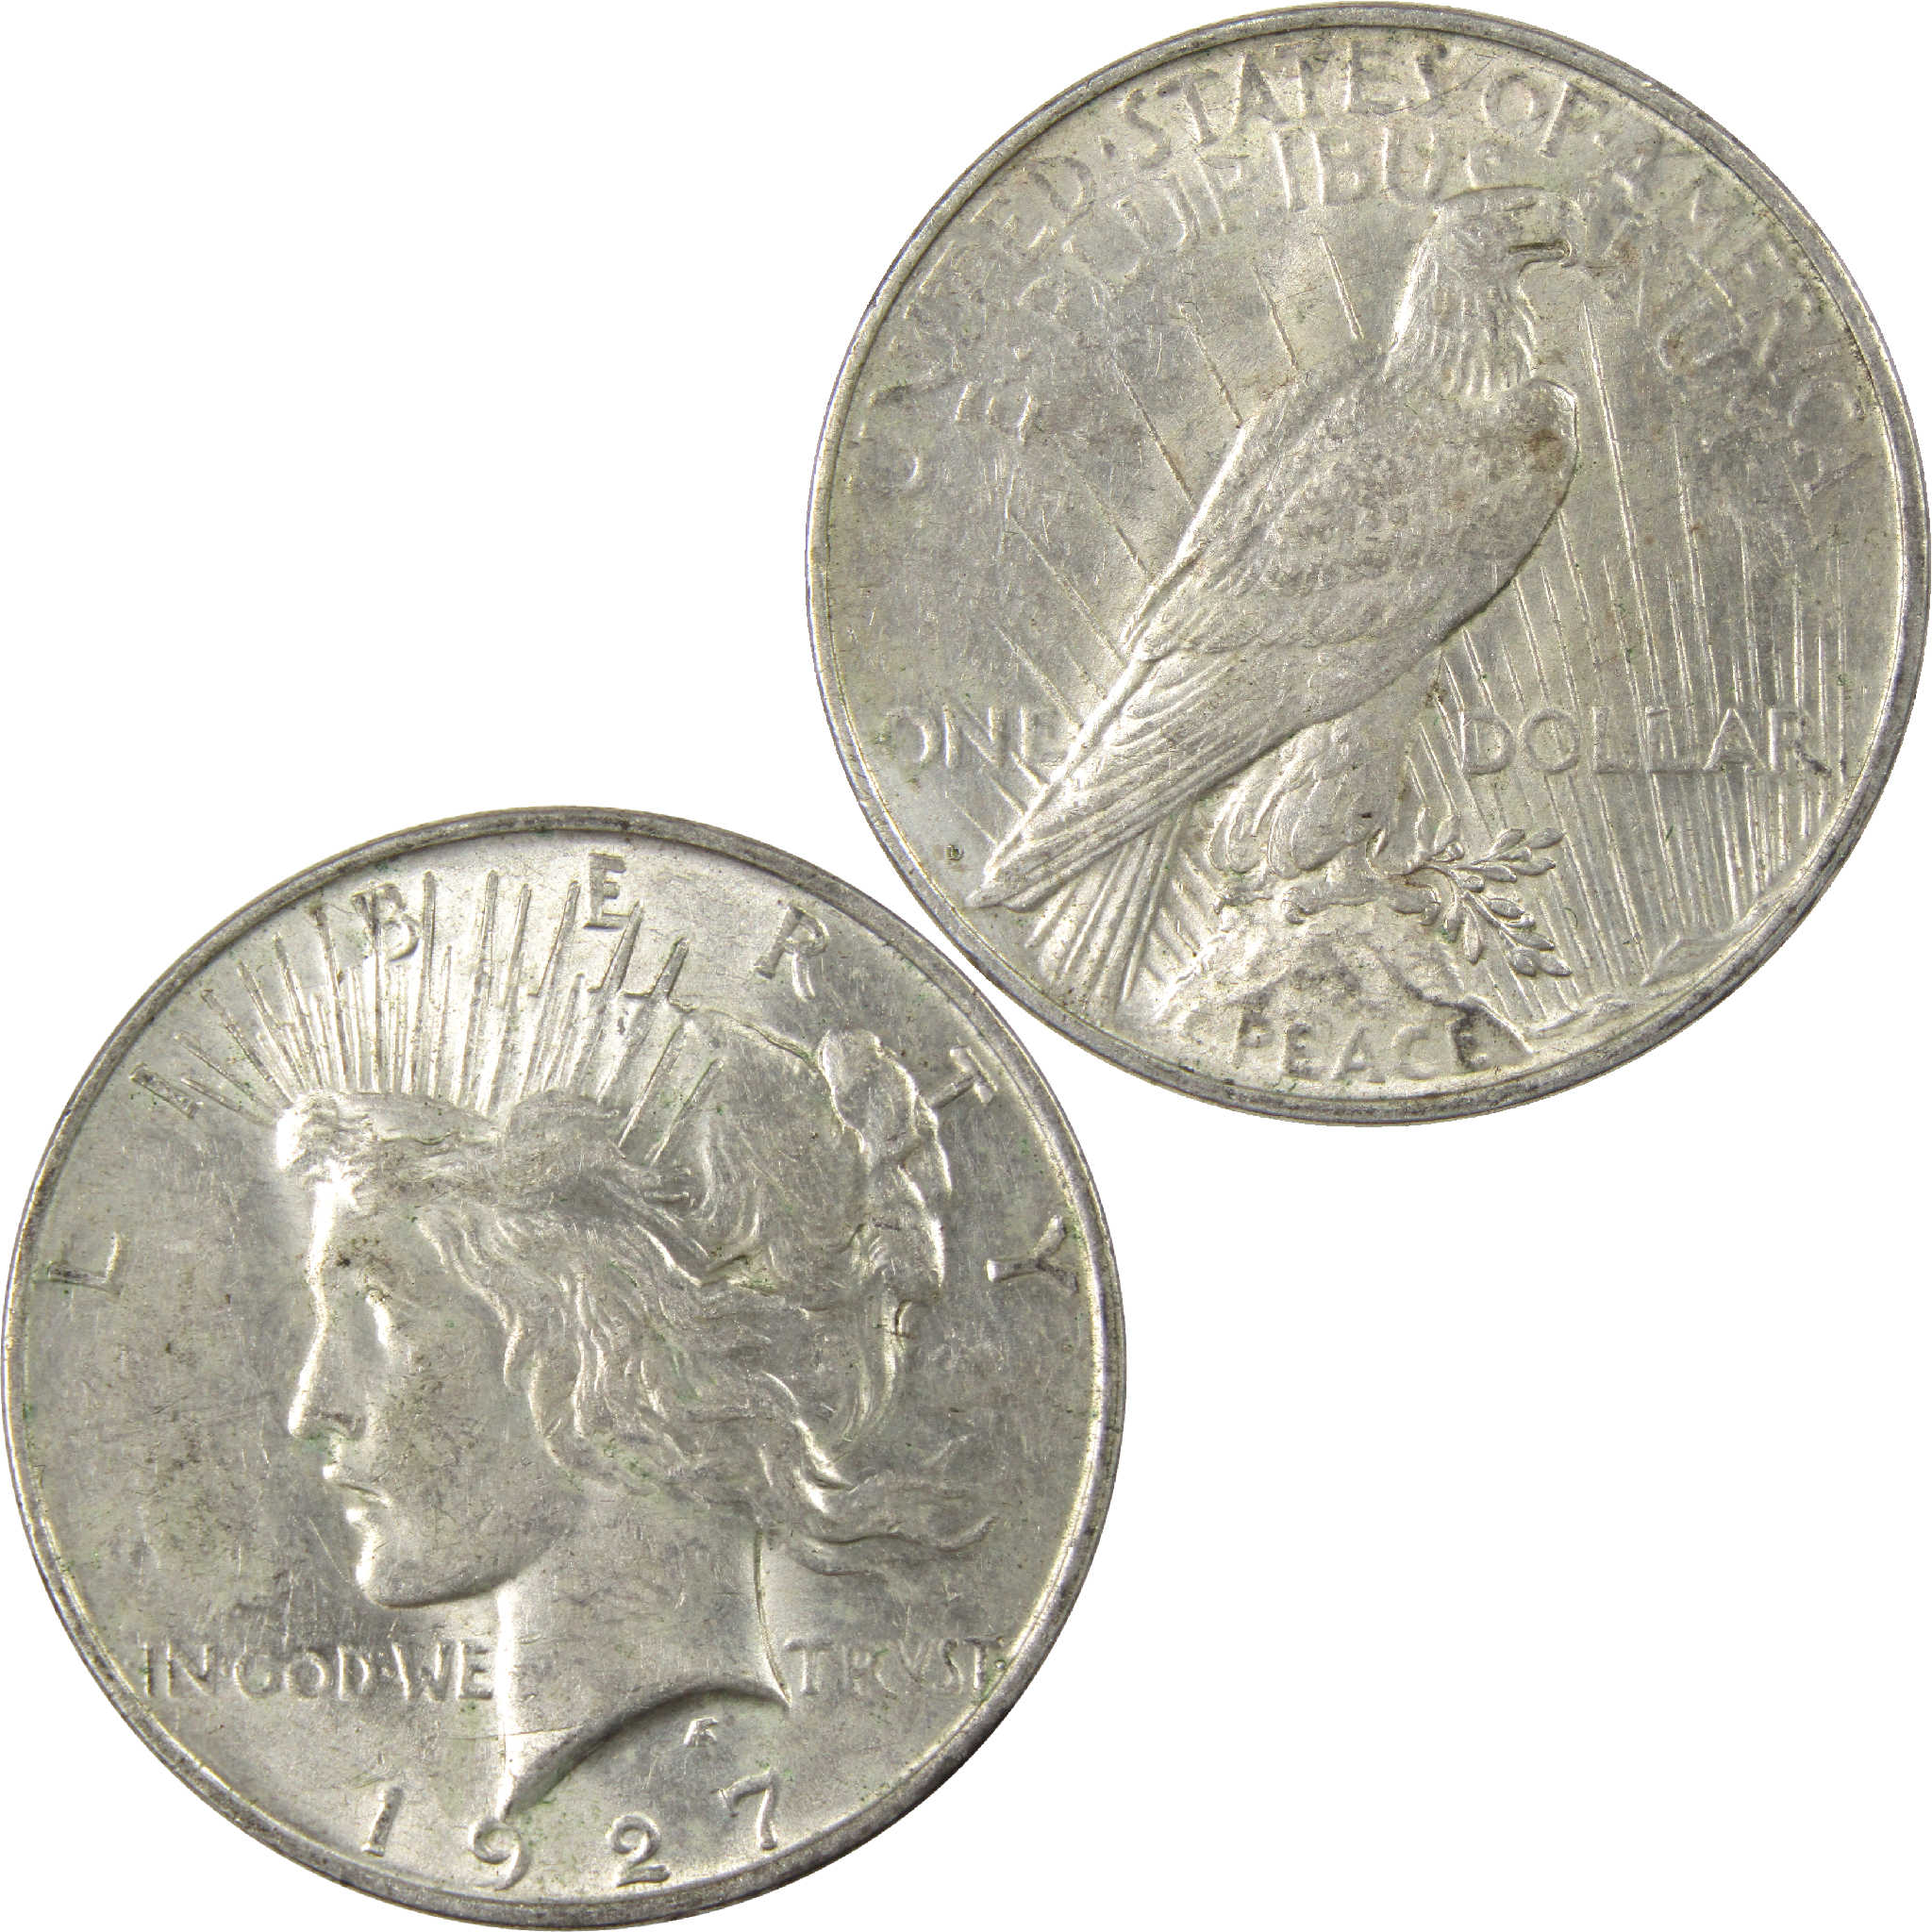 1927 D Peace Dollar Borderline Uncirculated Silver $1 Coin SKU:I11510